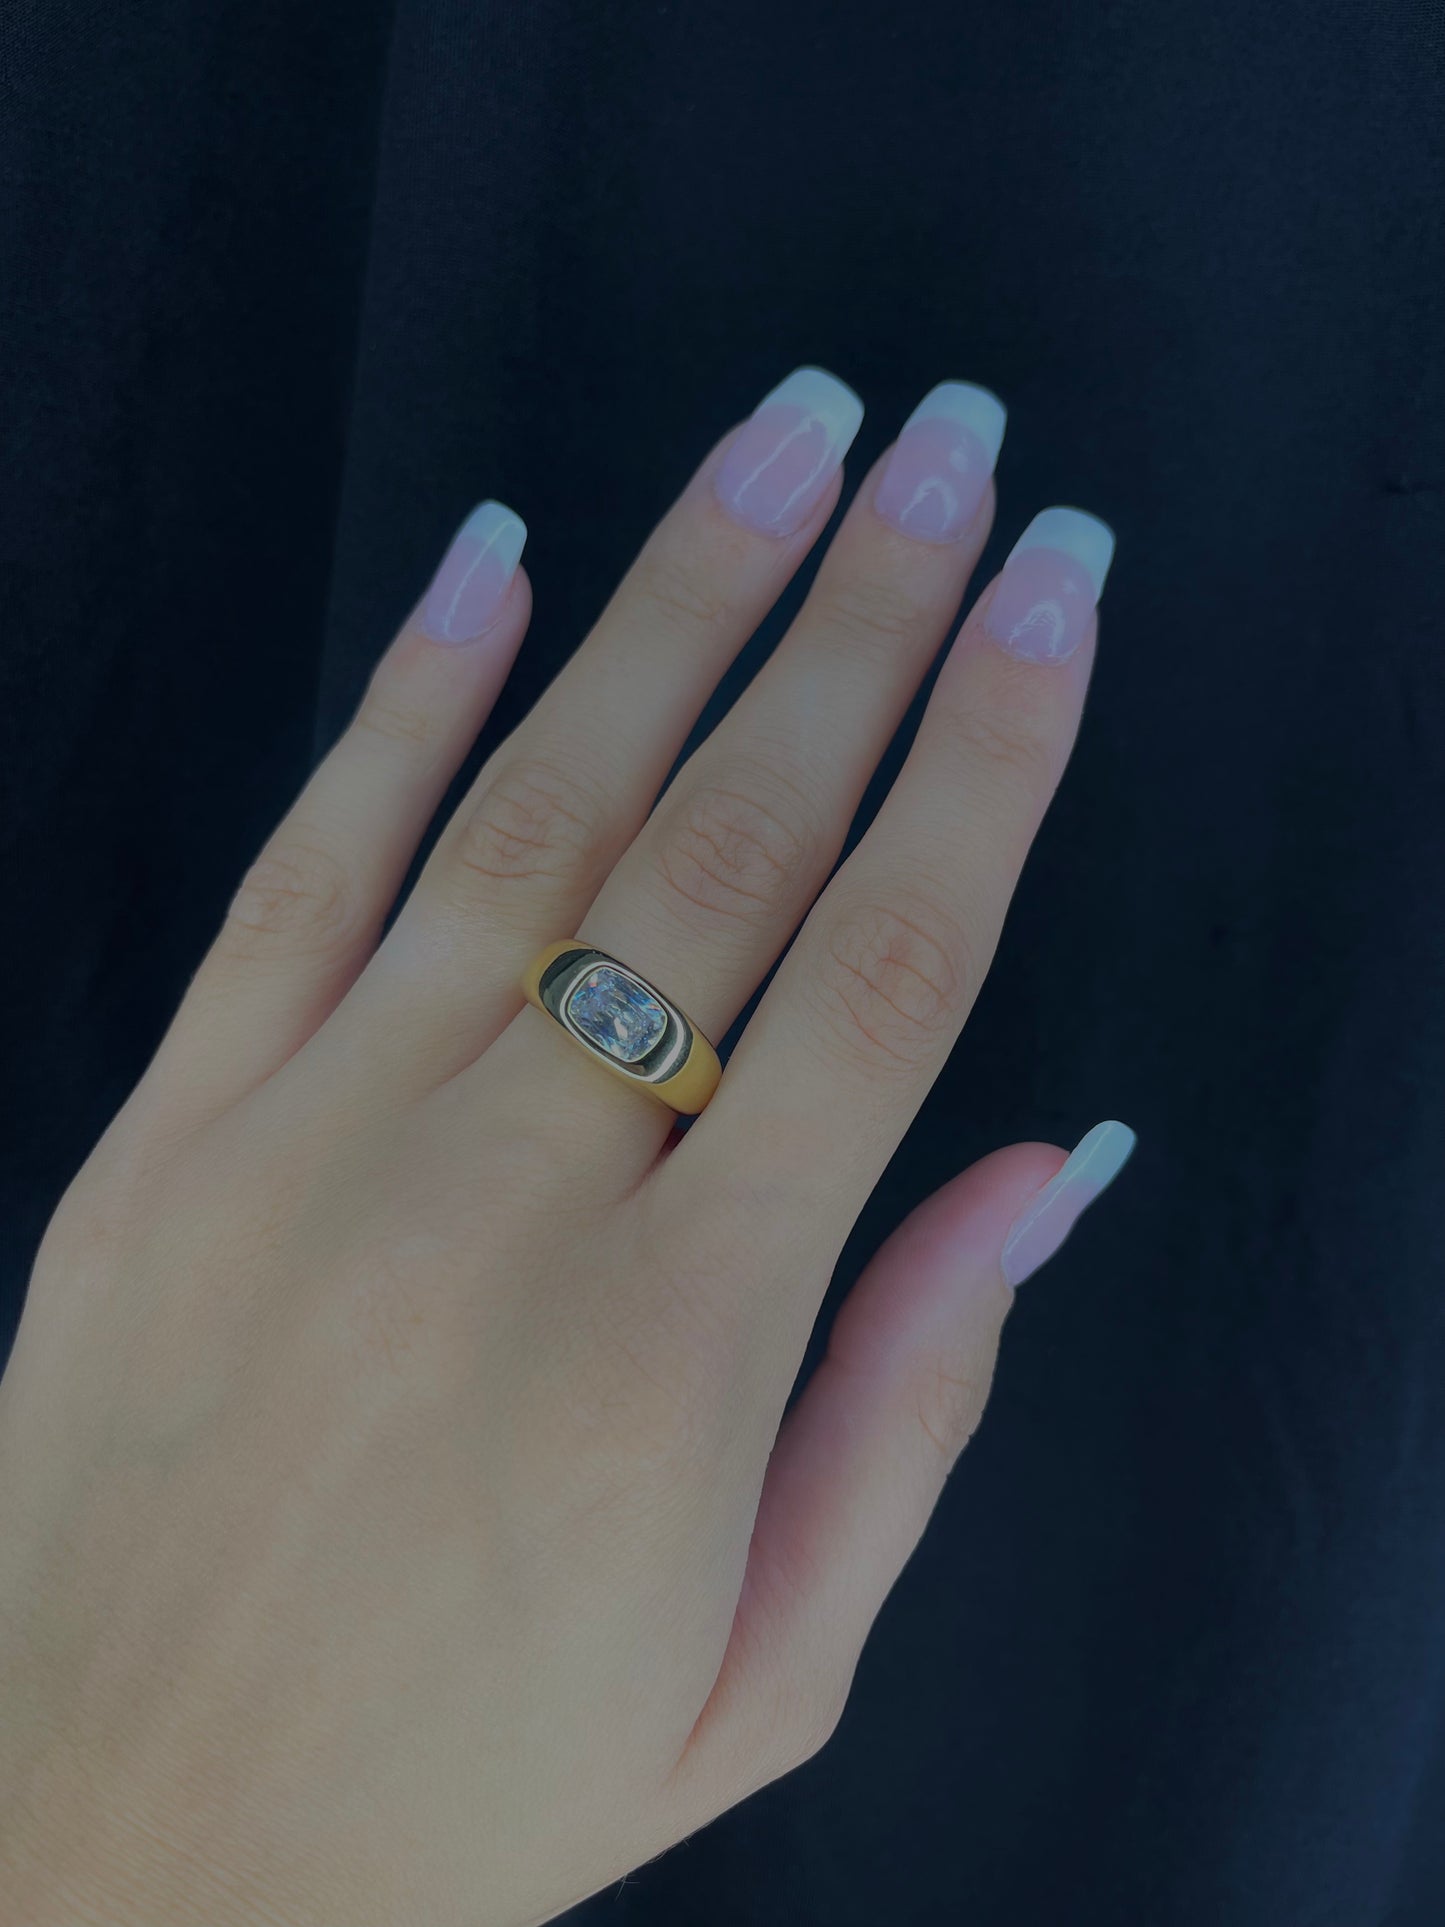 The Chunky Diamond Ring